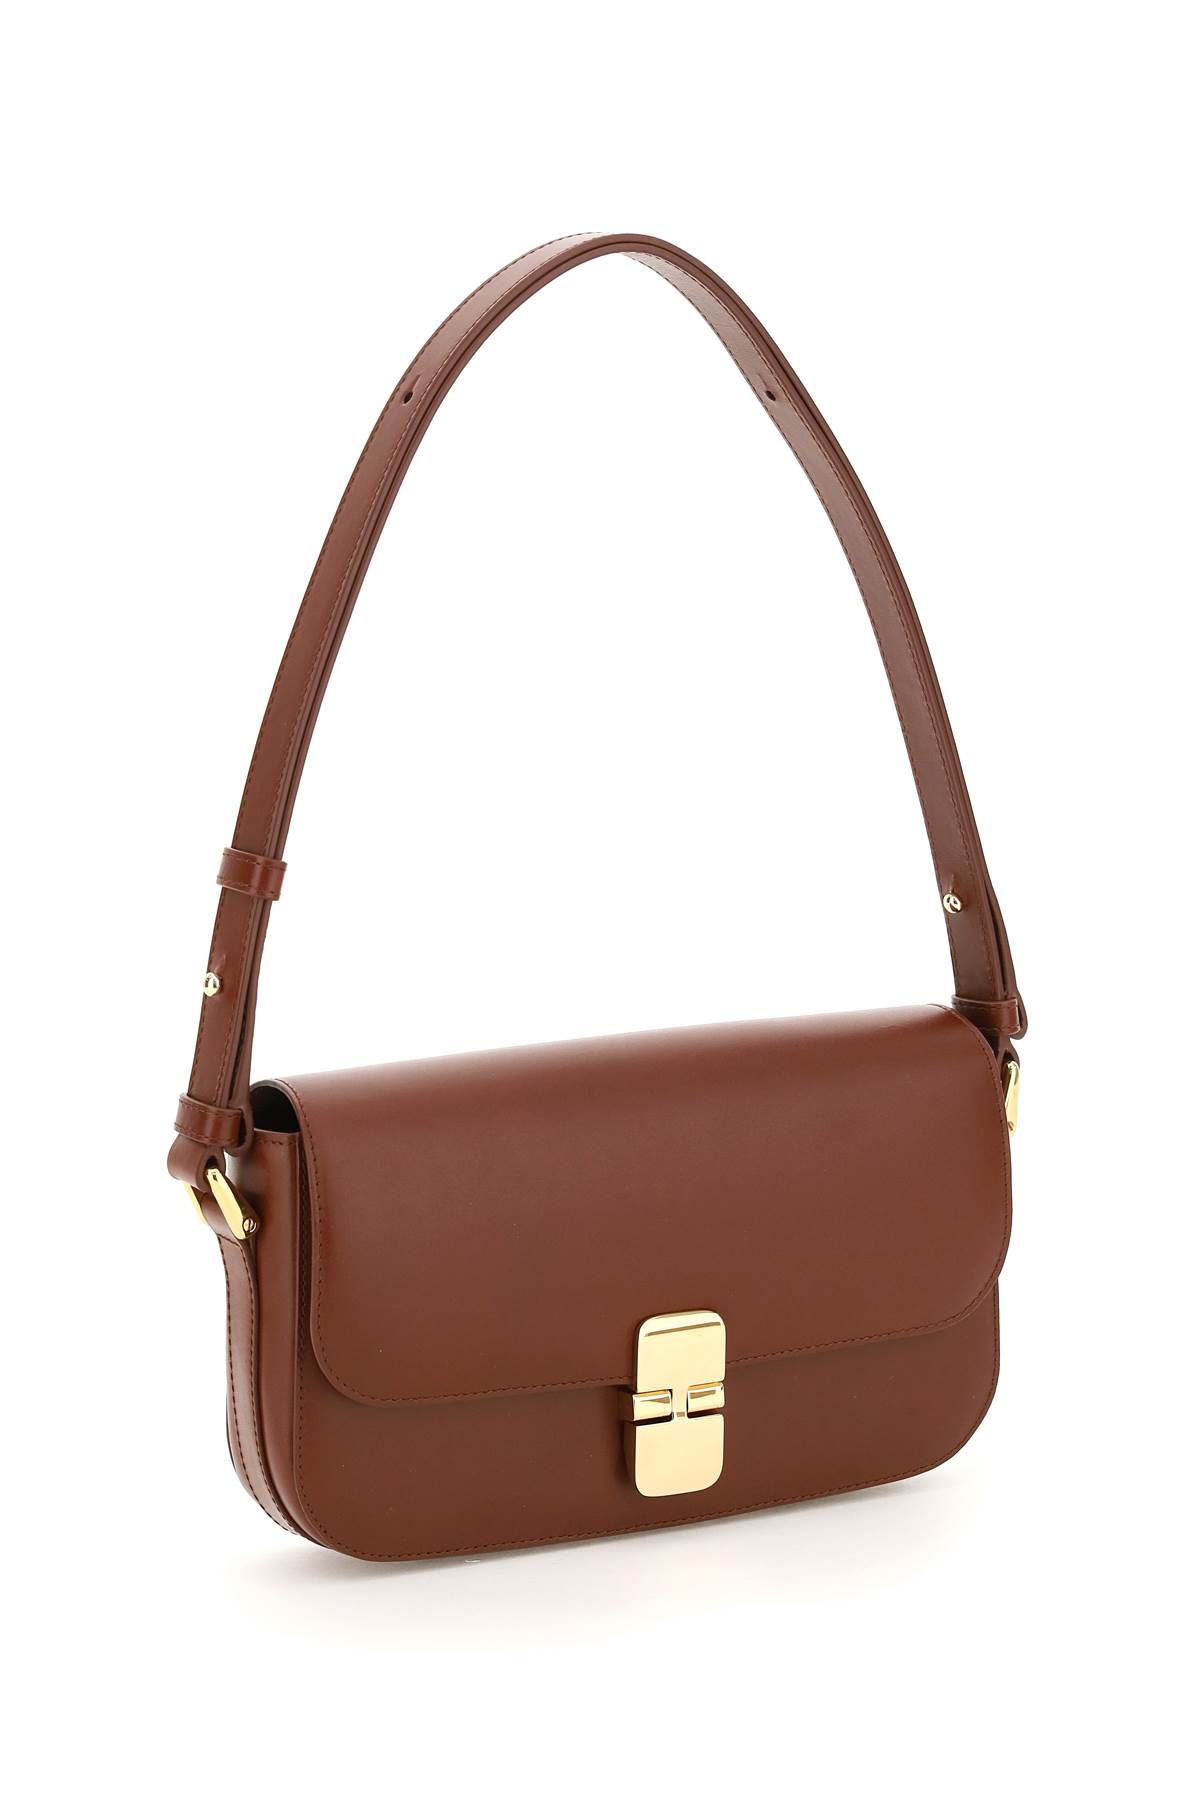 Shop Apc Grace Baguette Bag In Brown